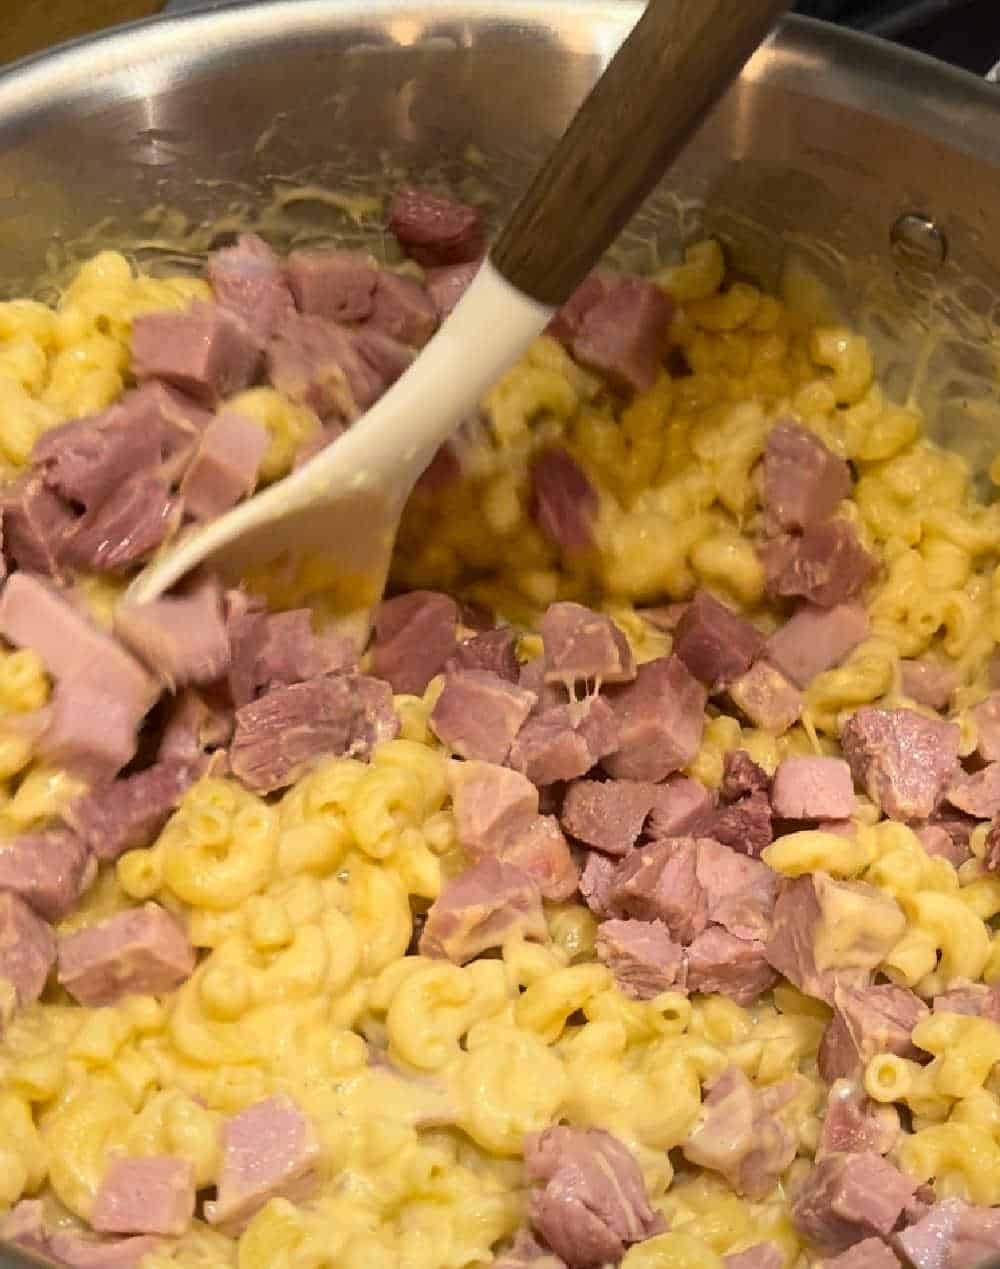 stir cooked ham into macaroni.